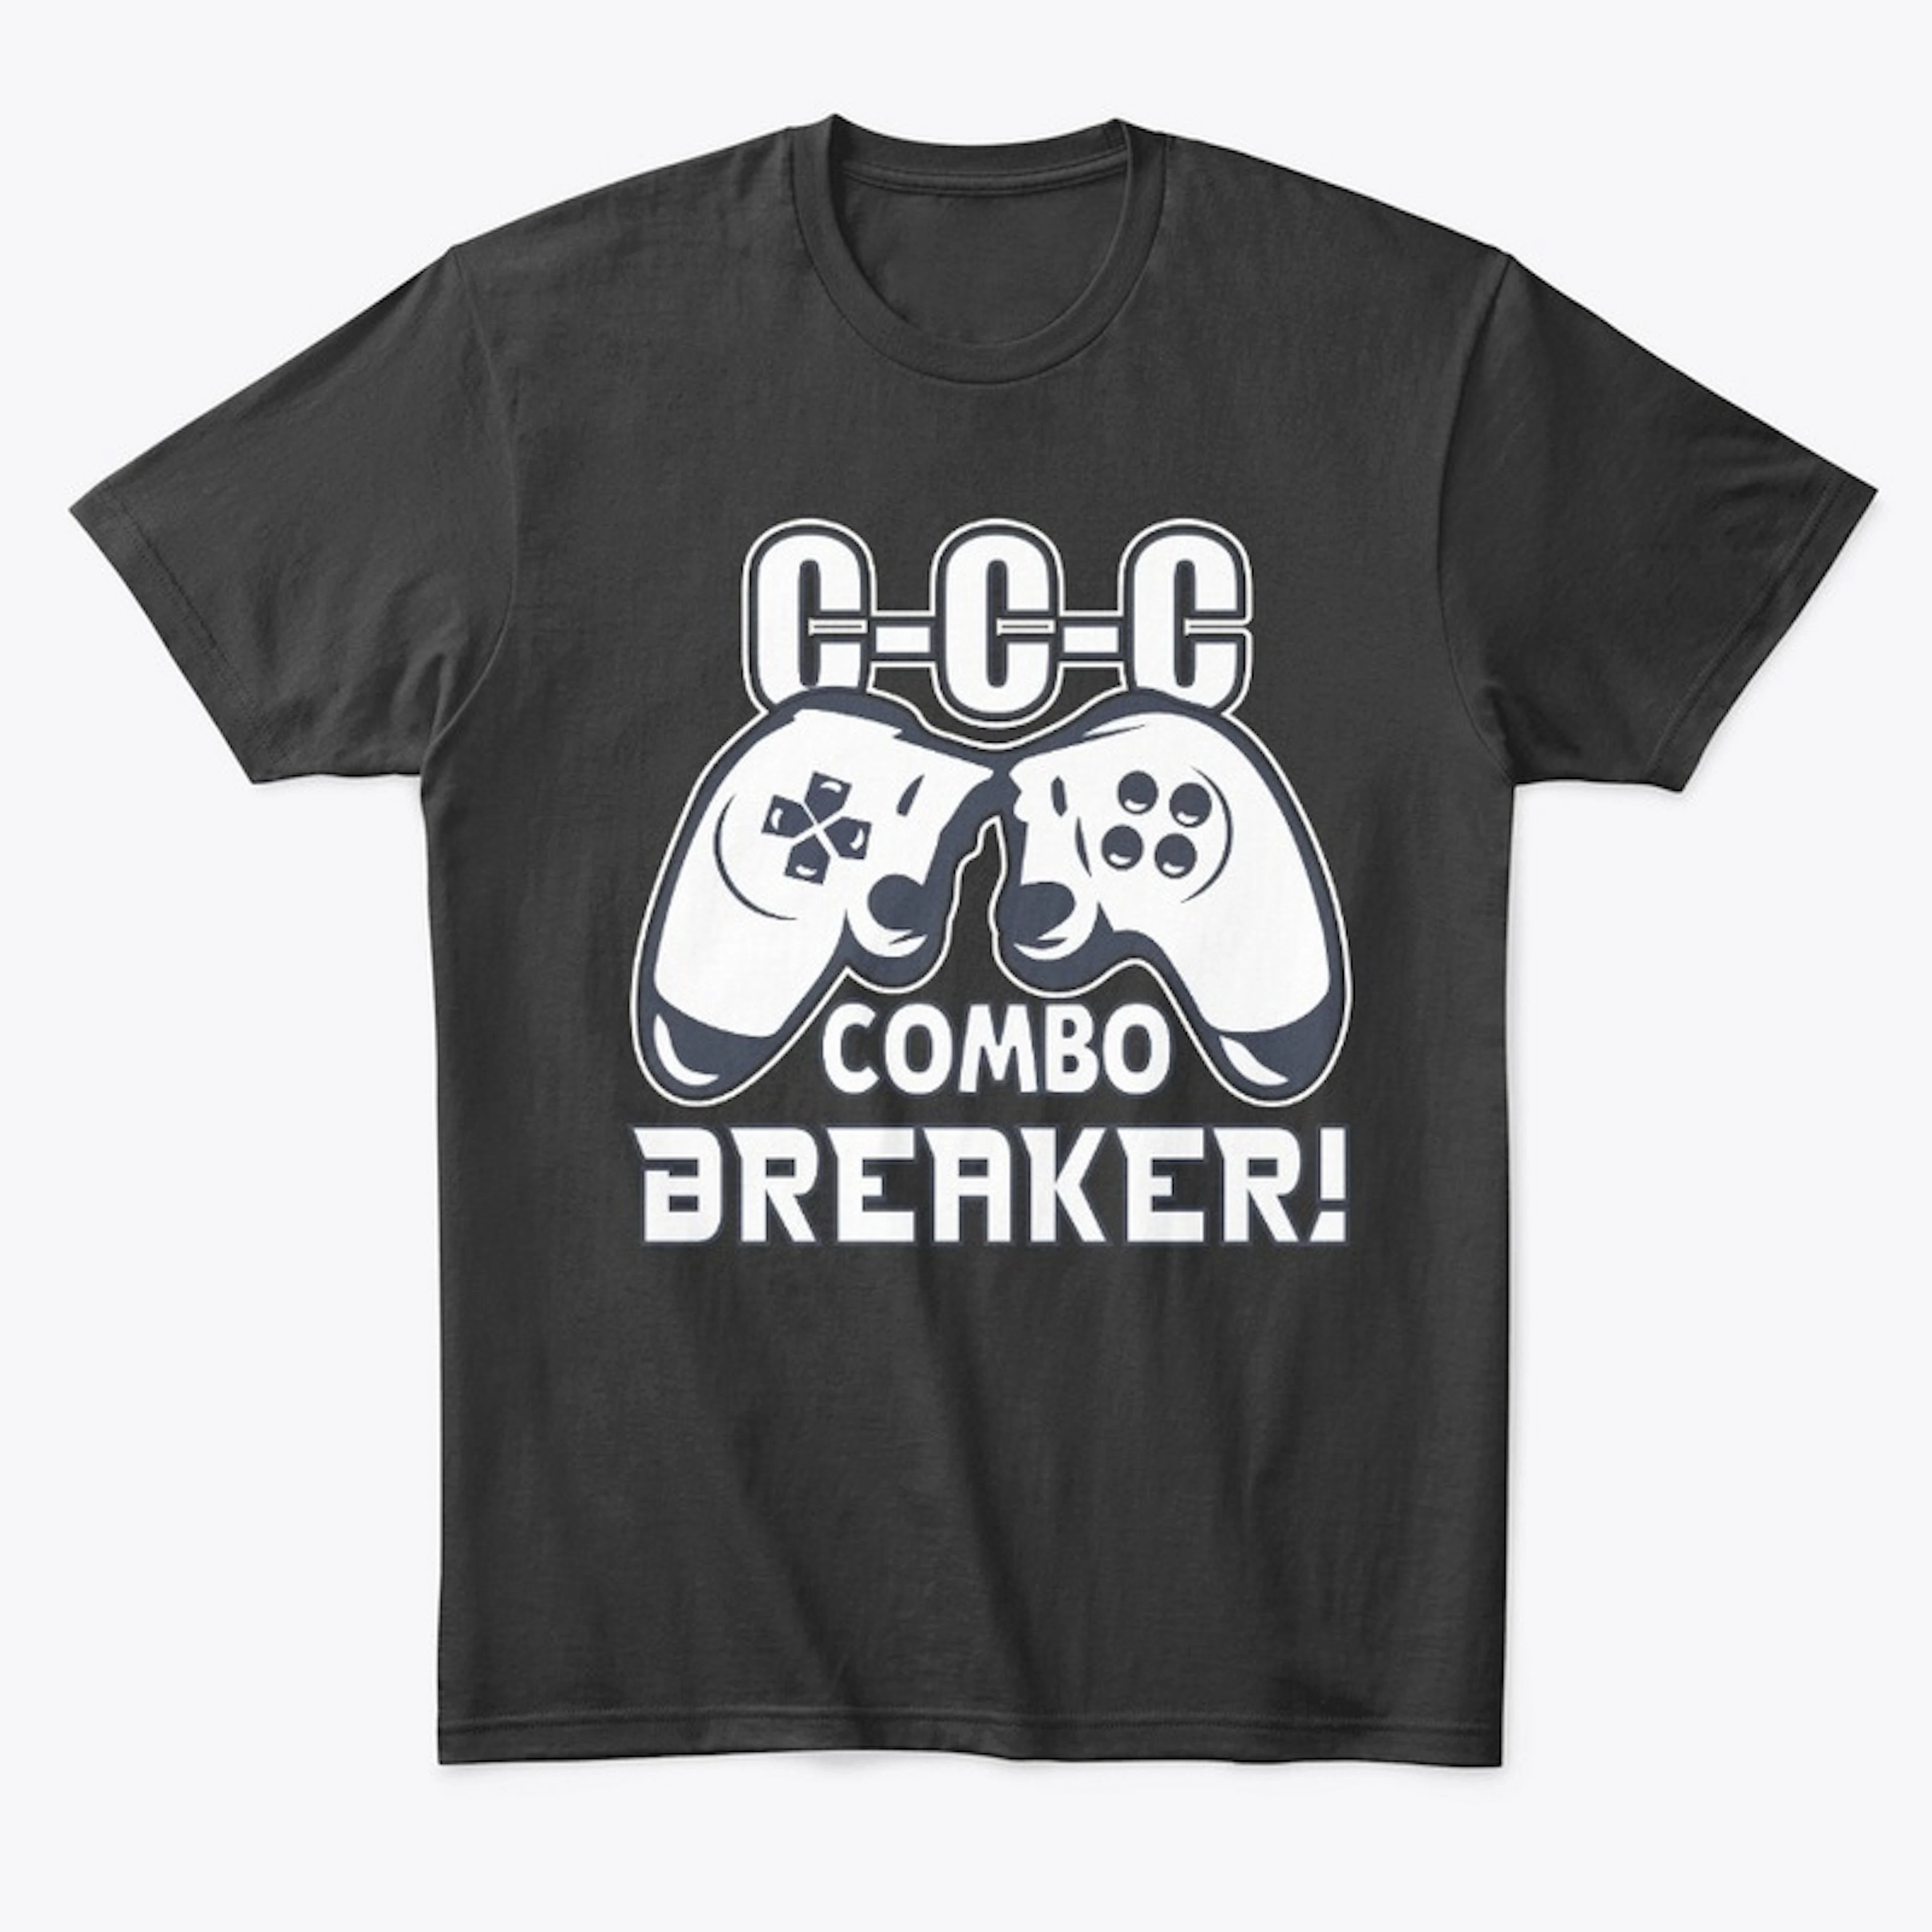 C-C-C Combo Breaker